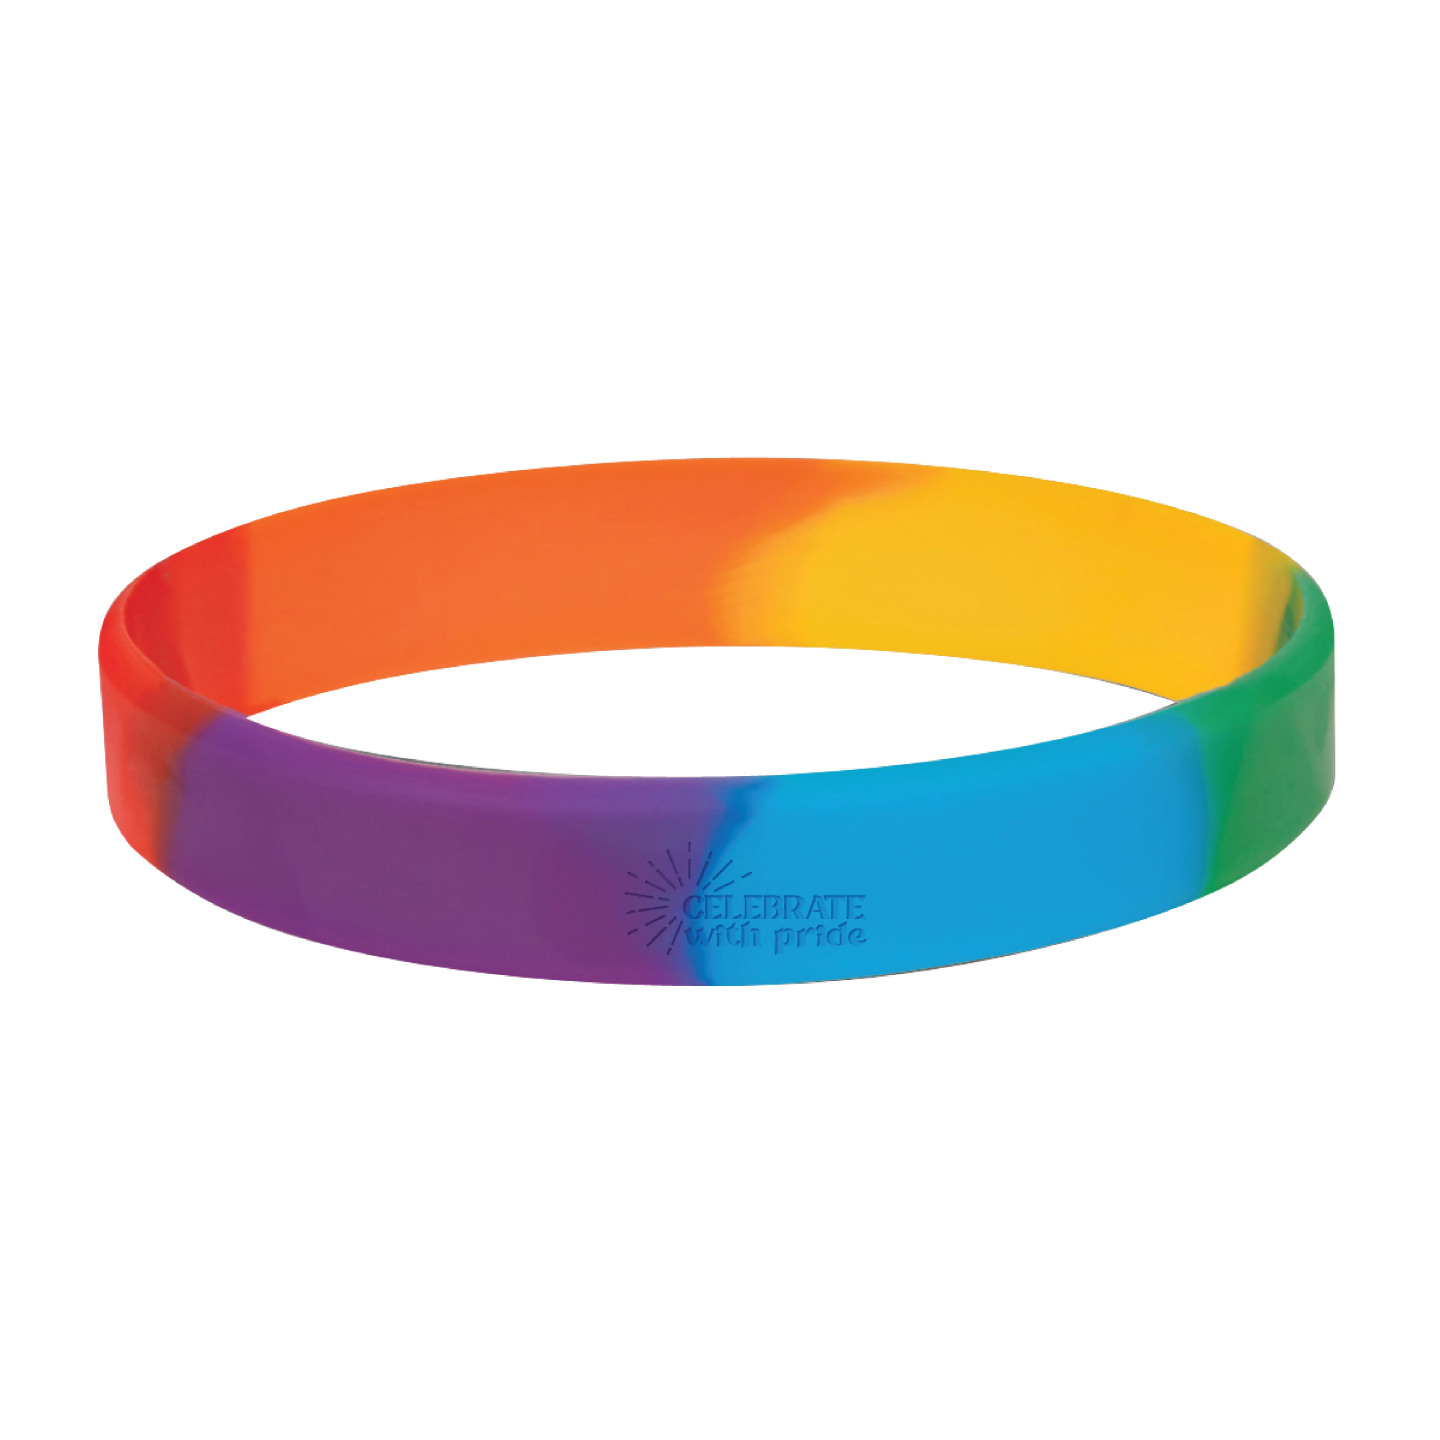 Promo Colorific Rainbow Silicone Bracelet